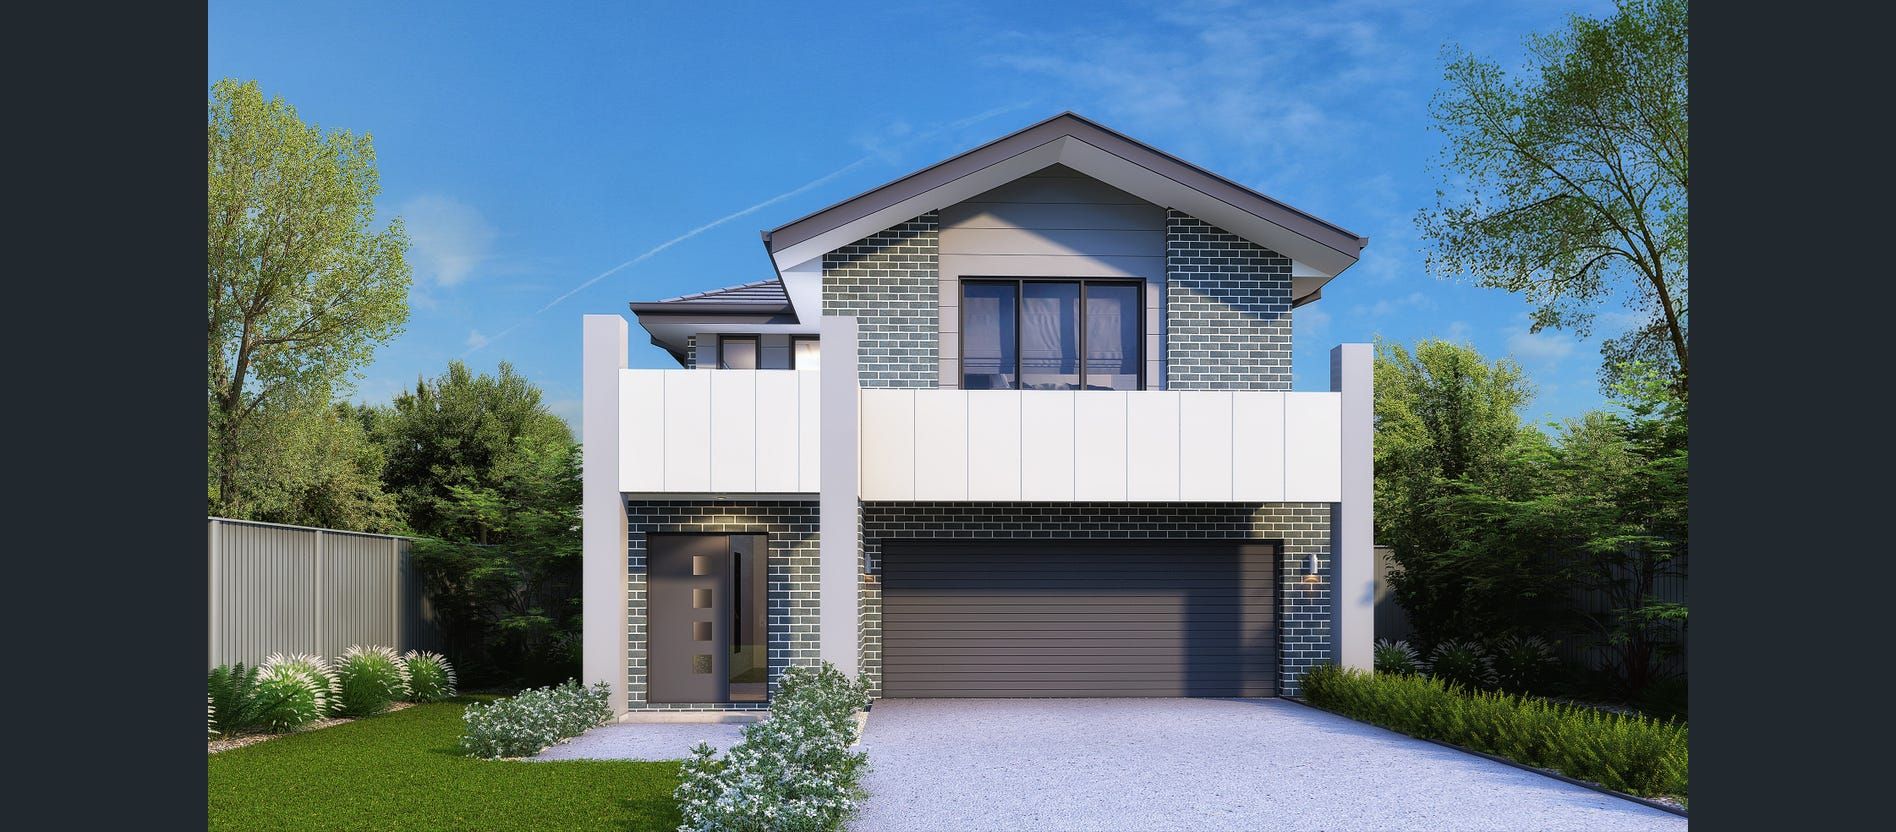 4 bedrooms New House & Land in  MARSDEN PARK NSW, 2765